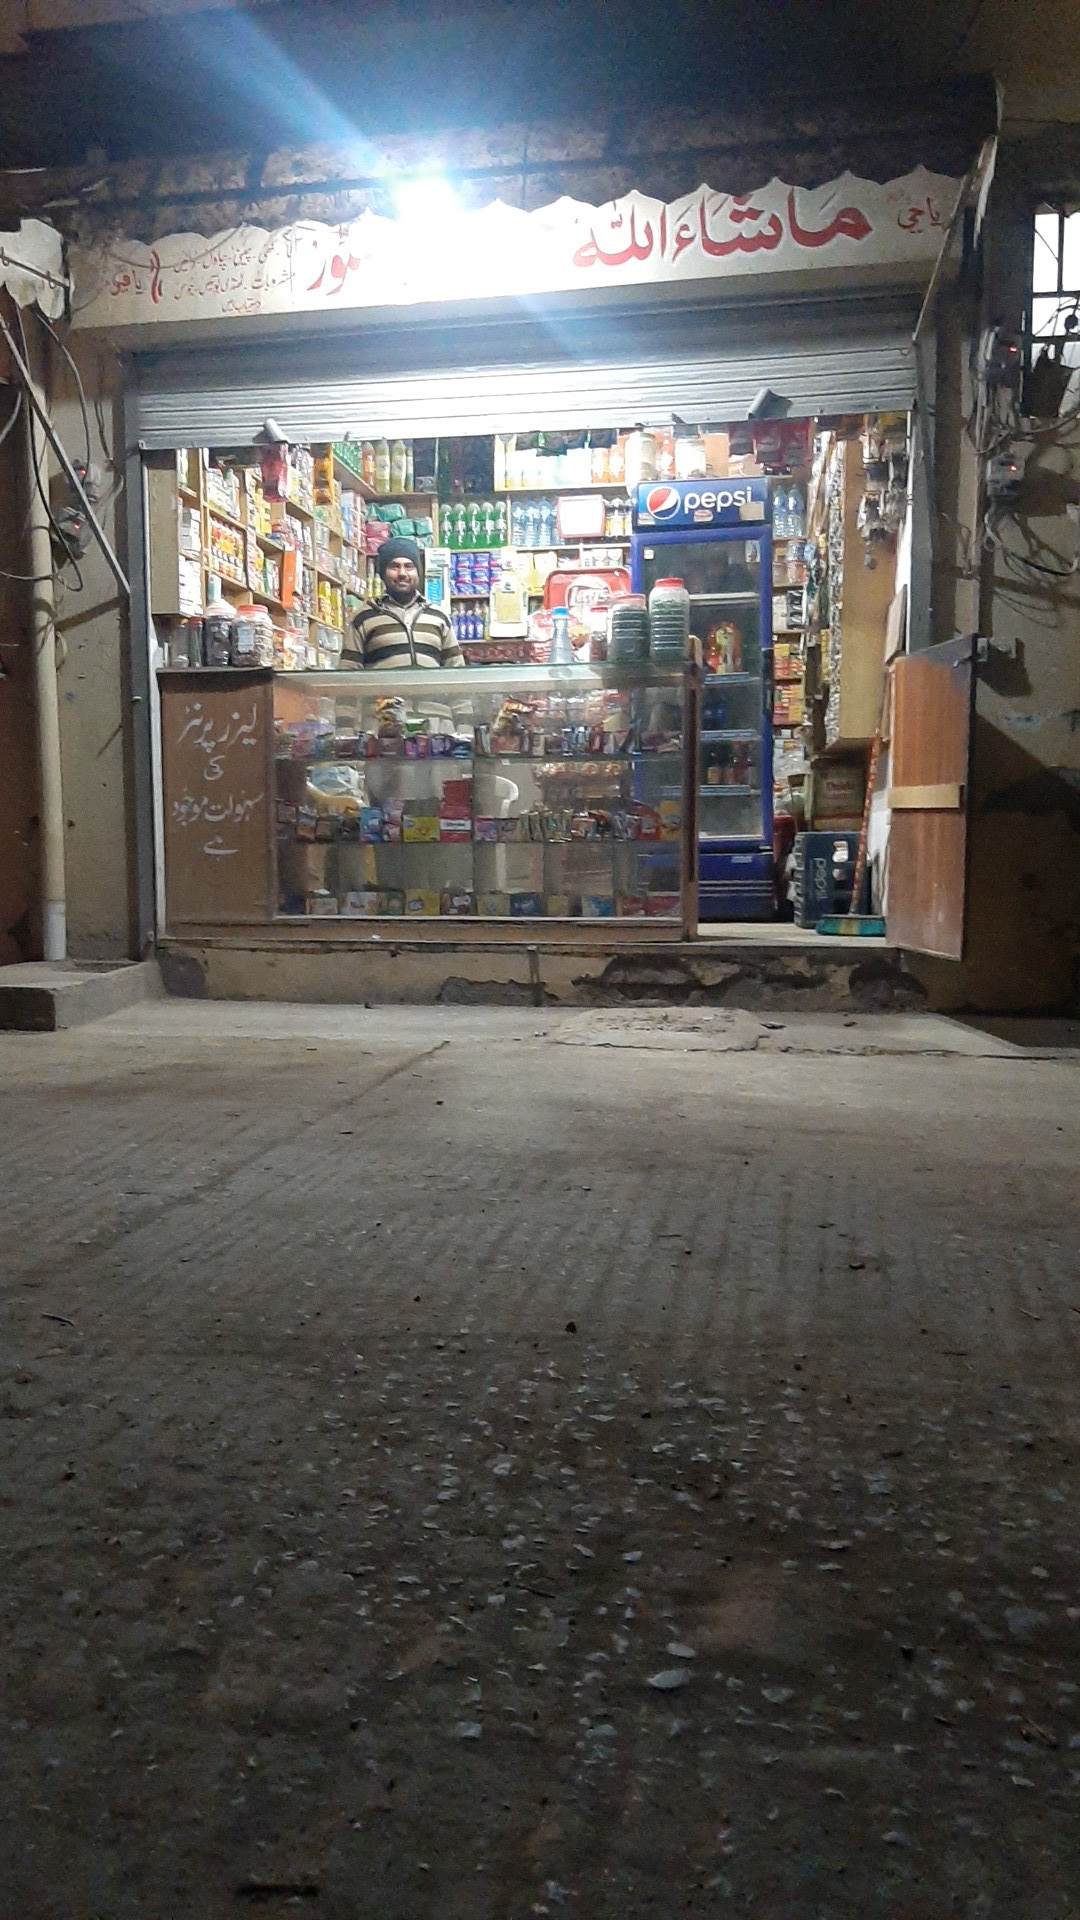 MashAllah General Store